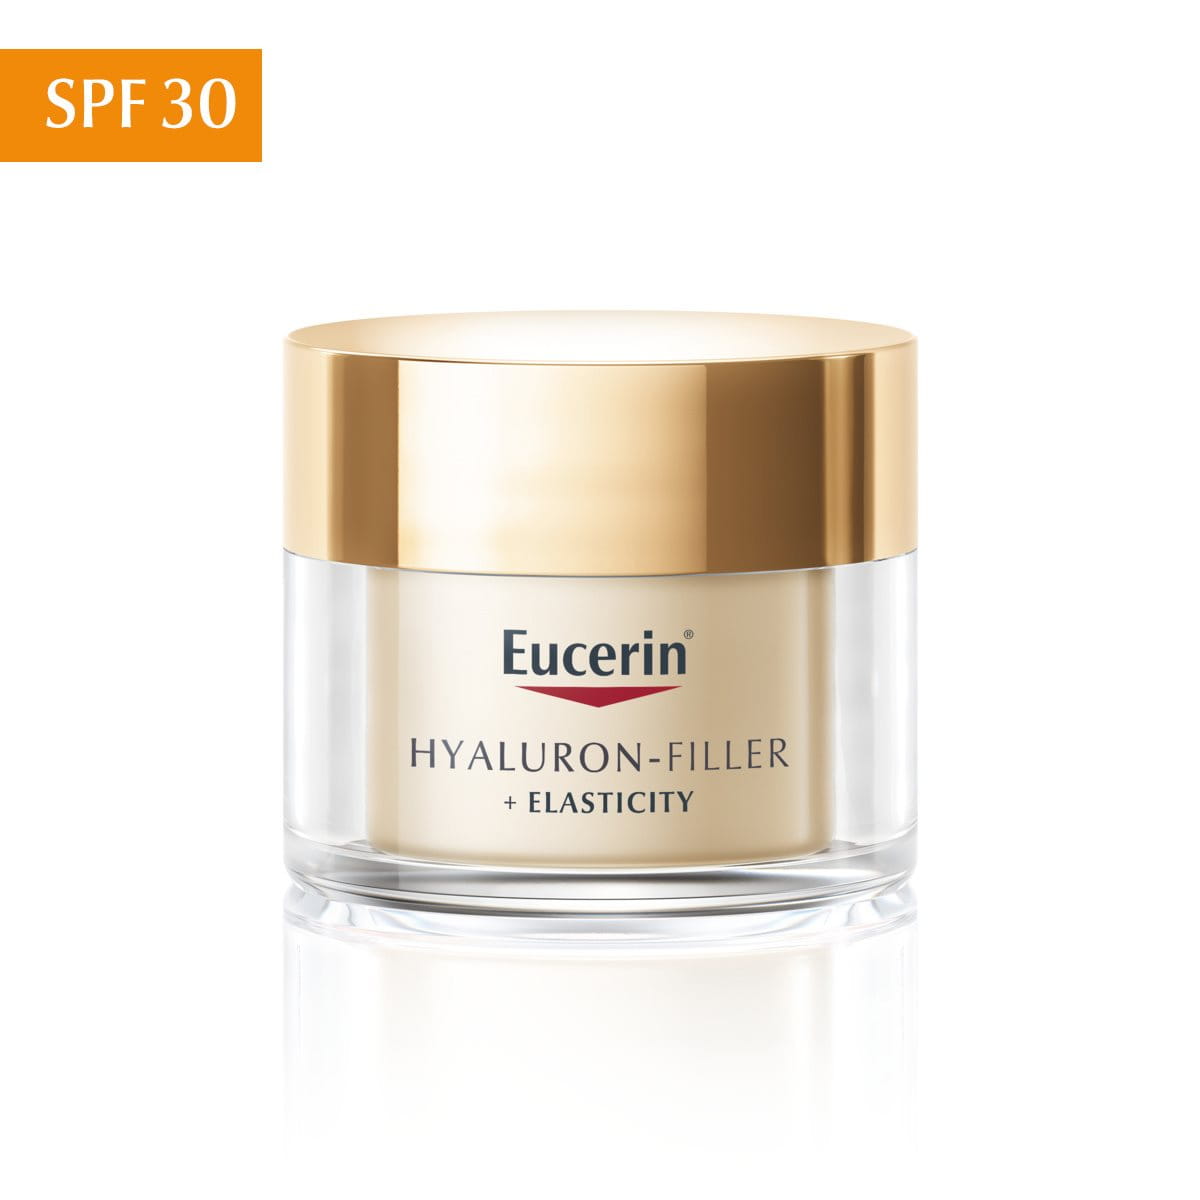 Eucerin Hyaluron-Filler + Elasticity Day SPF 30: best moisturizer for mature skin